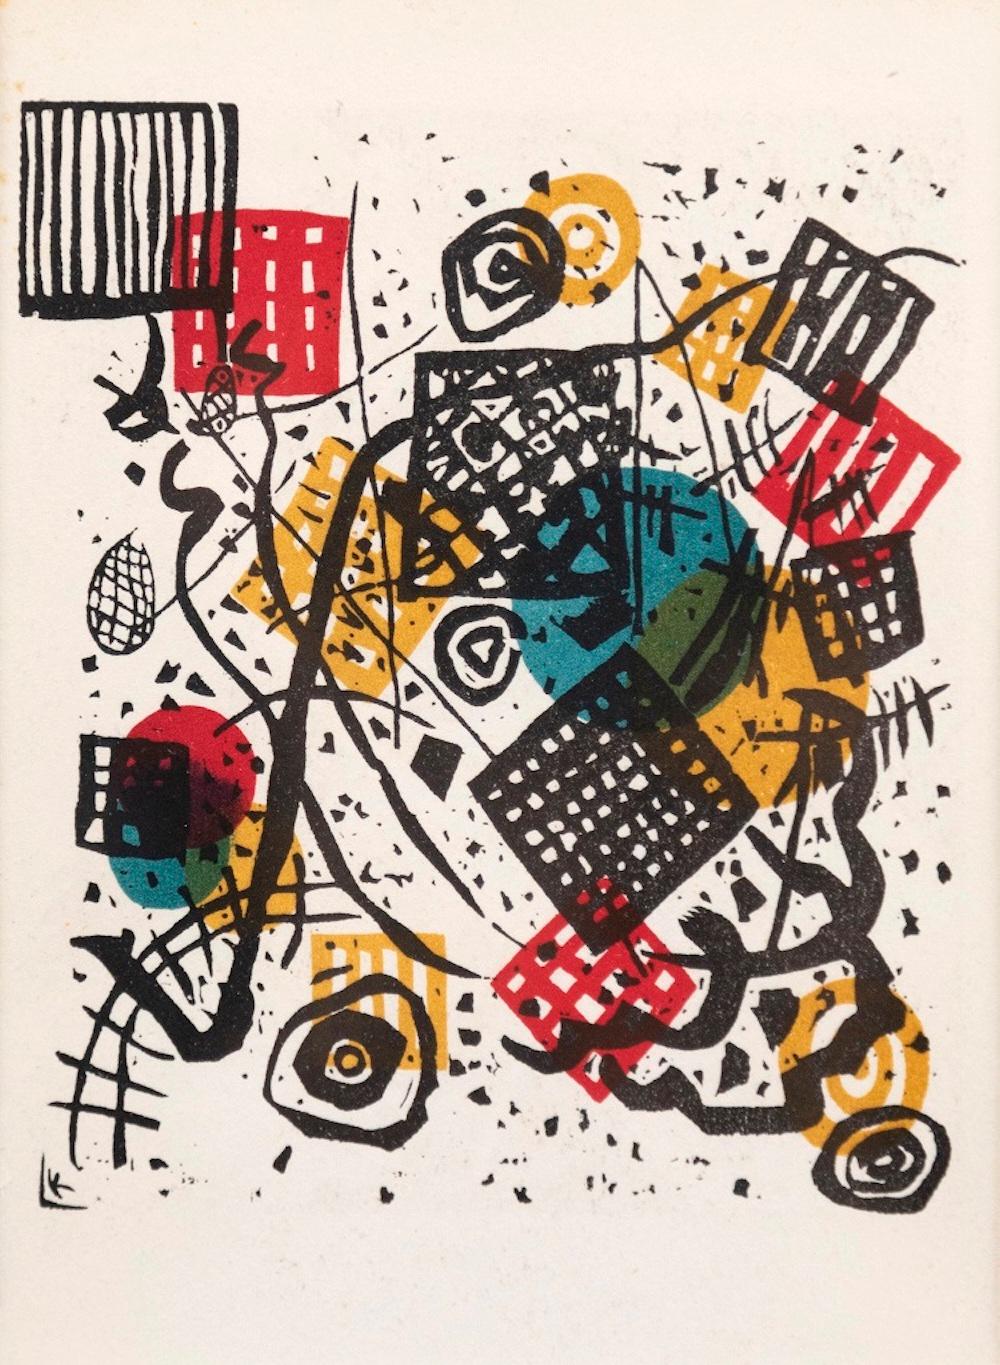 Wassily Kandinsky Abstract Print - Small Worlds V - Original Lithograph after W. Kandinsky - 1954